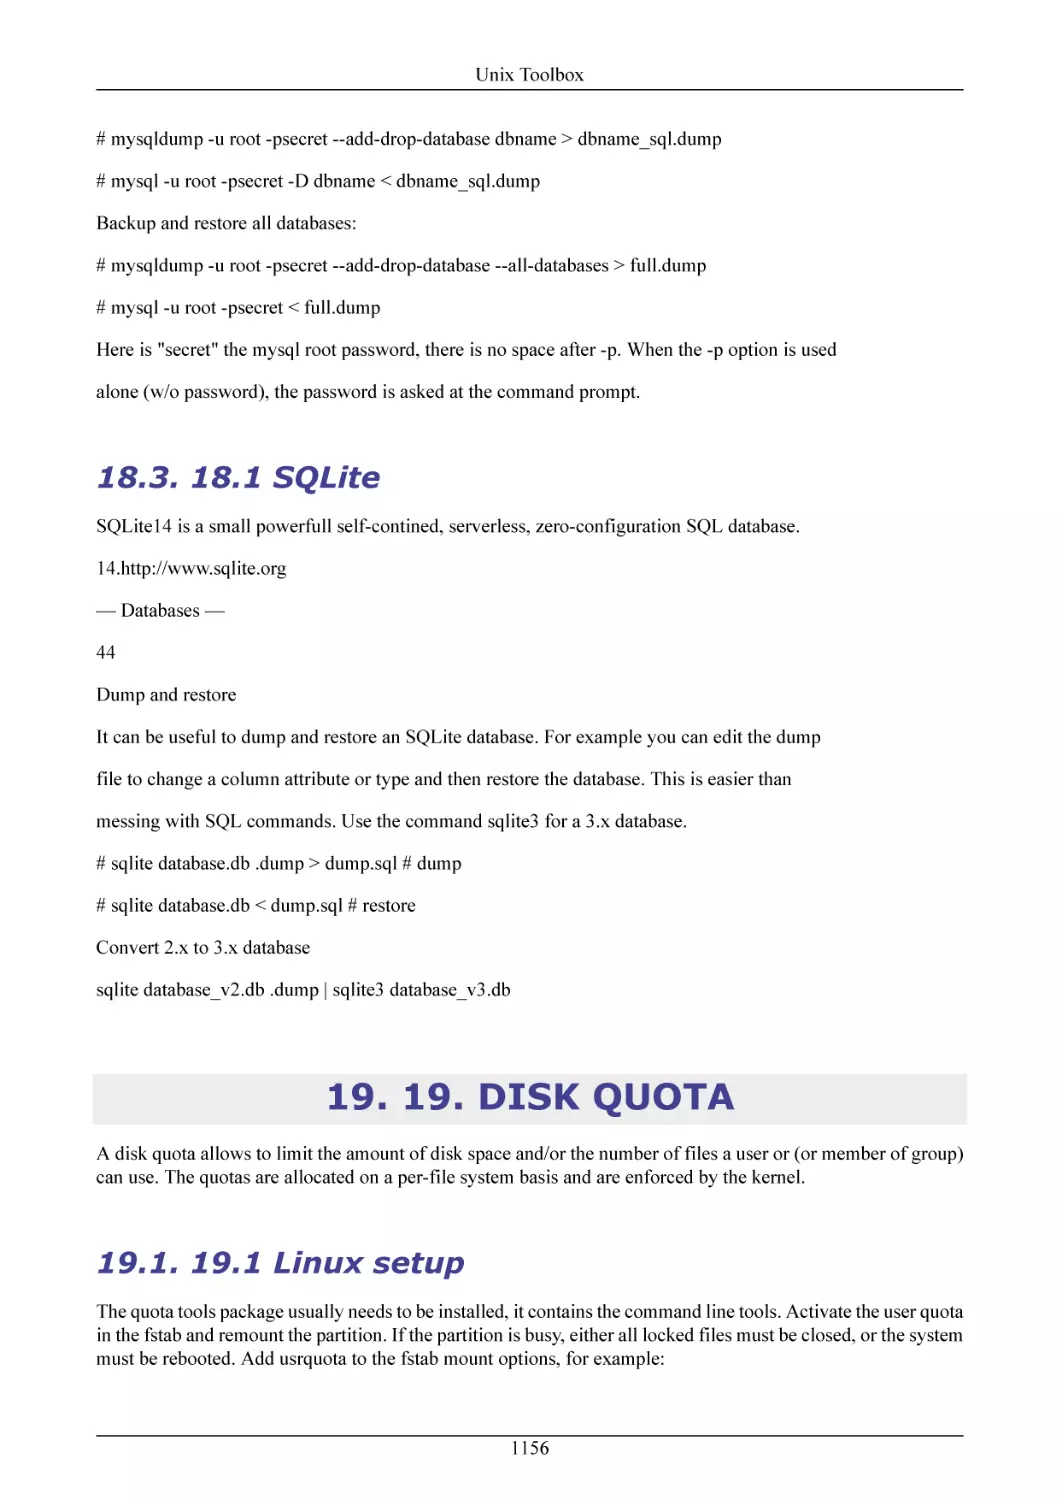 18.1 SQLite
19. DISK QUOTA
19.1 Linux setup